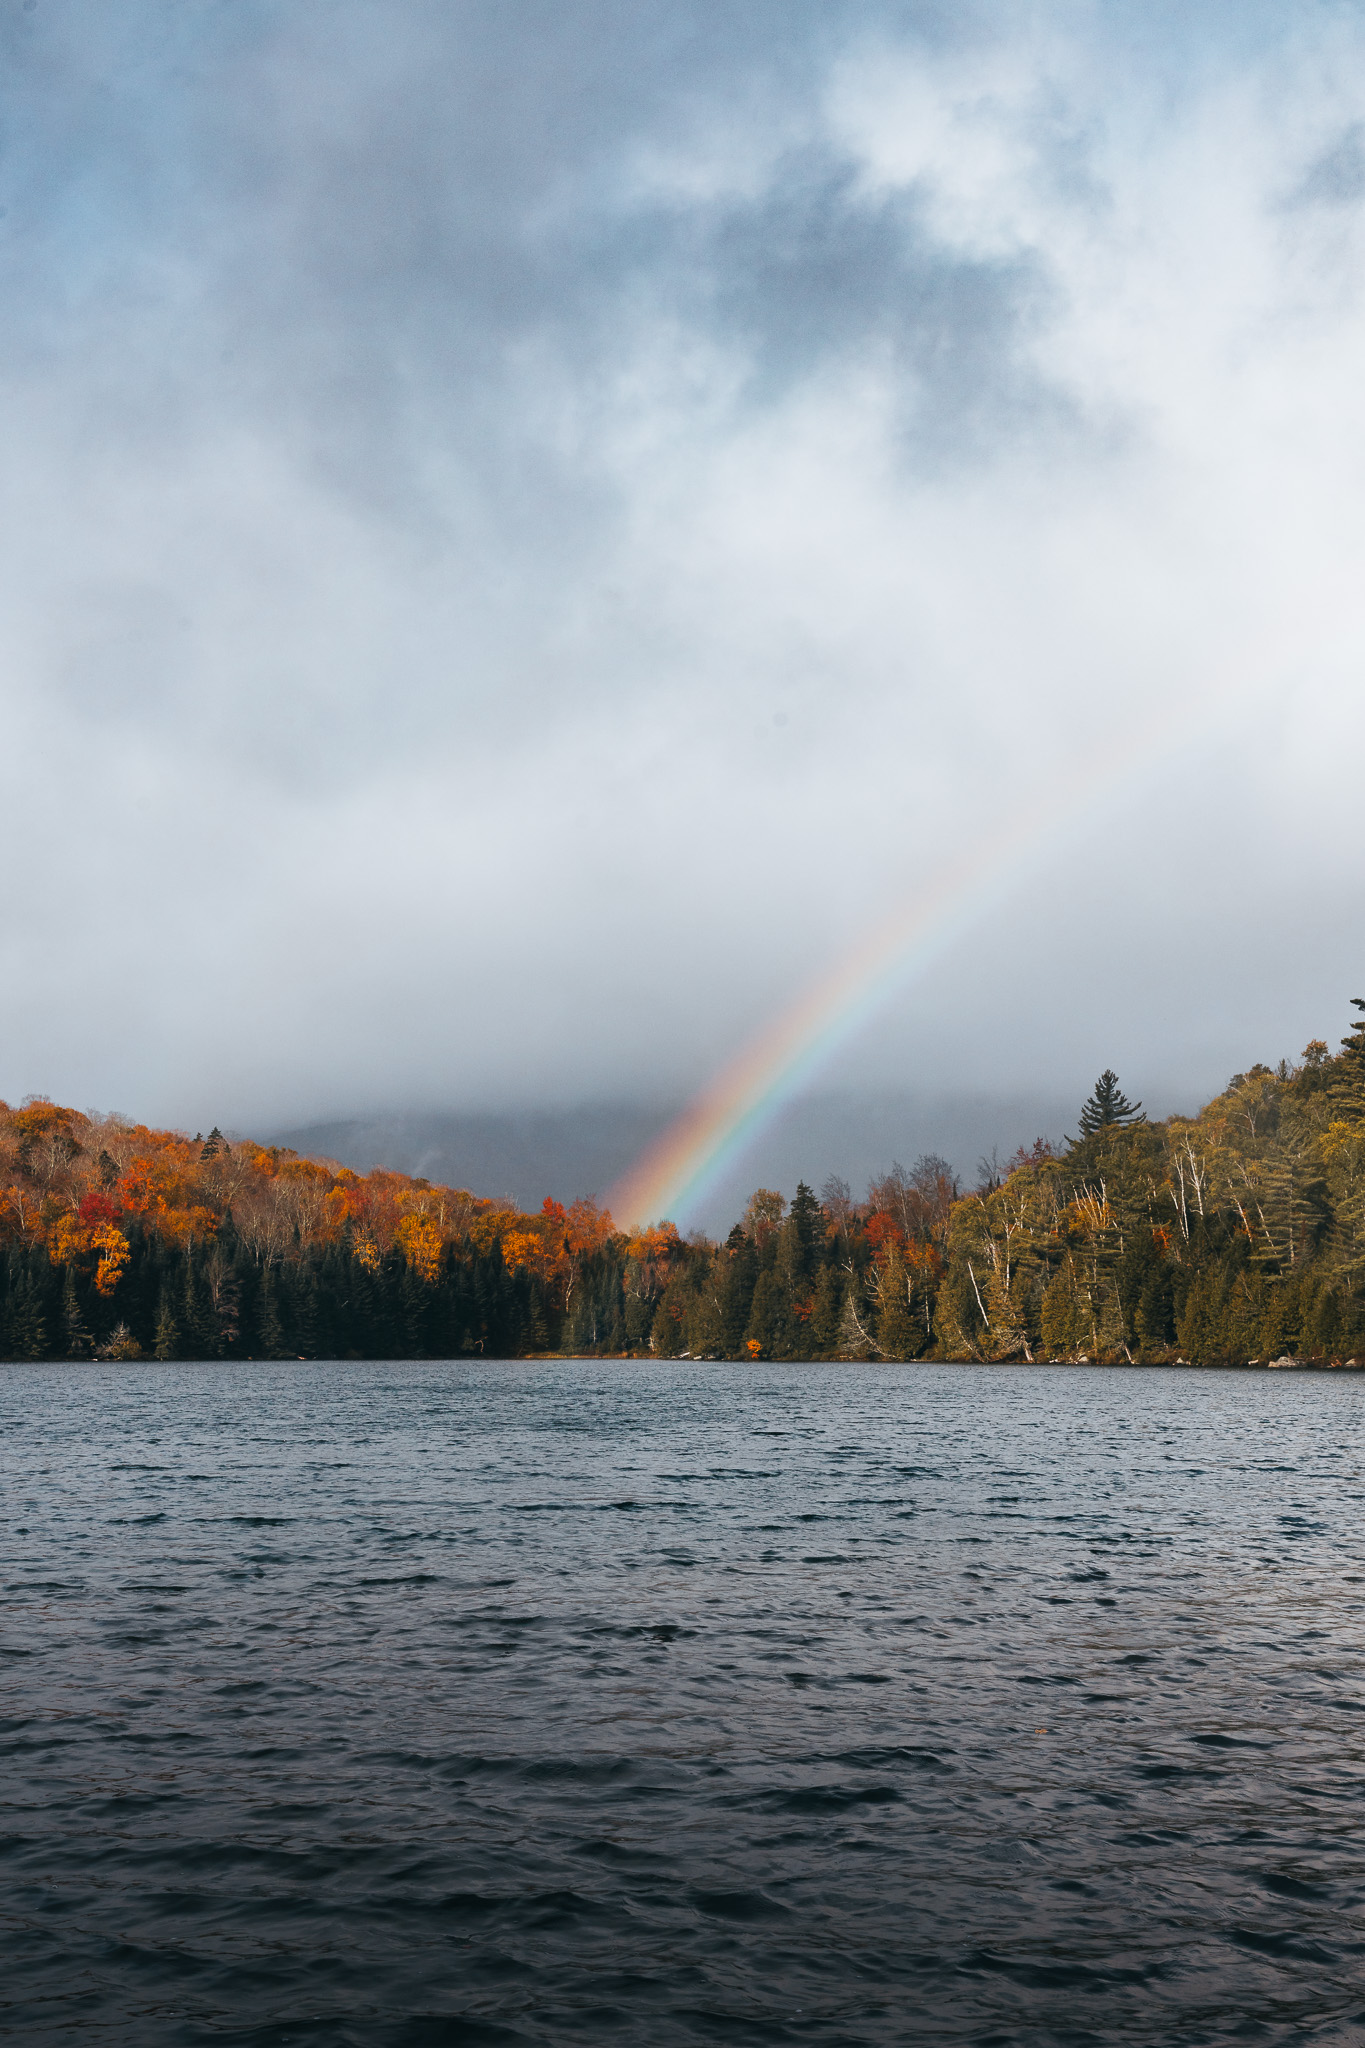 Heart Lake rainbow among fall foliage